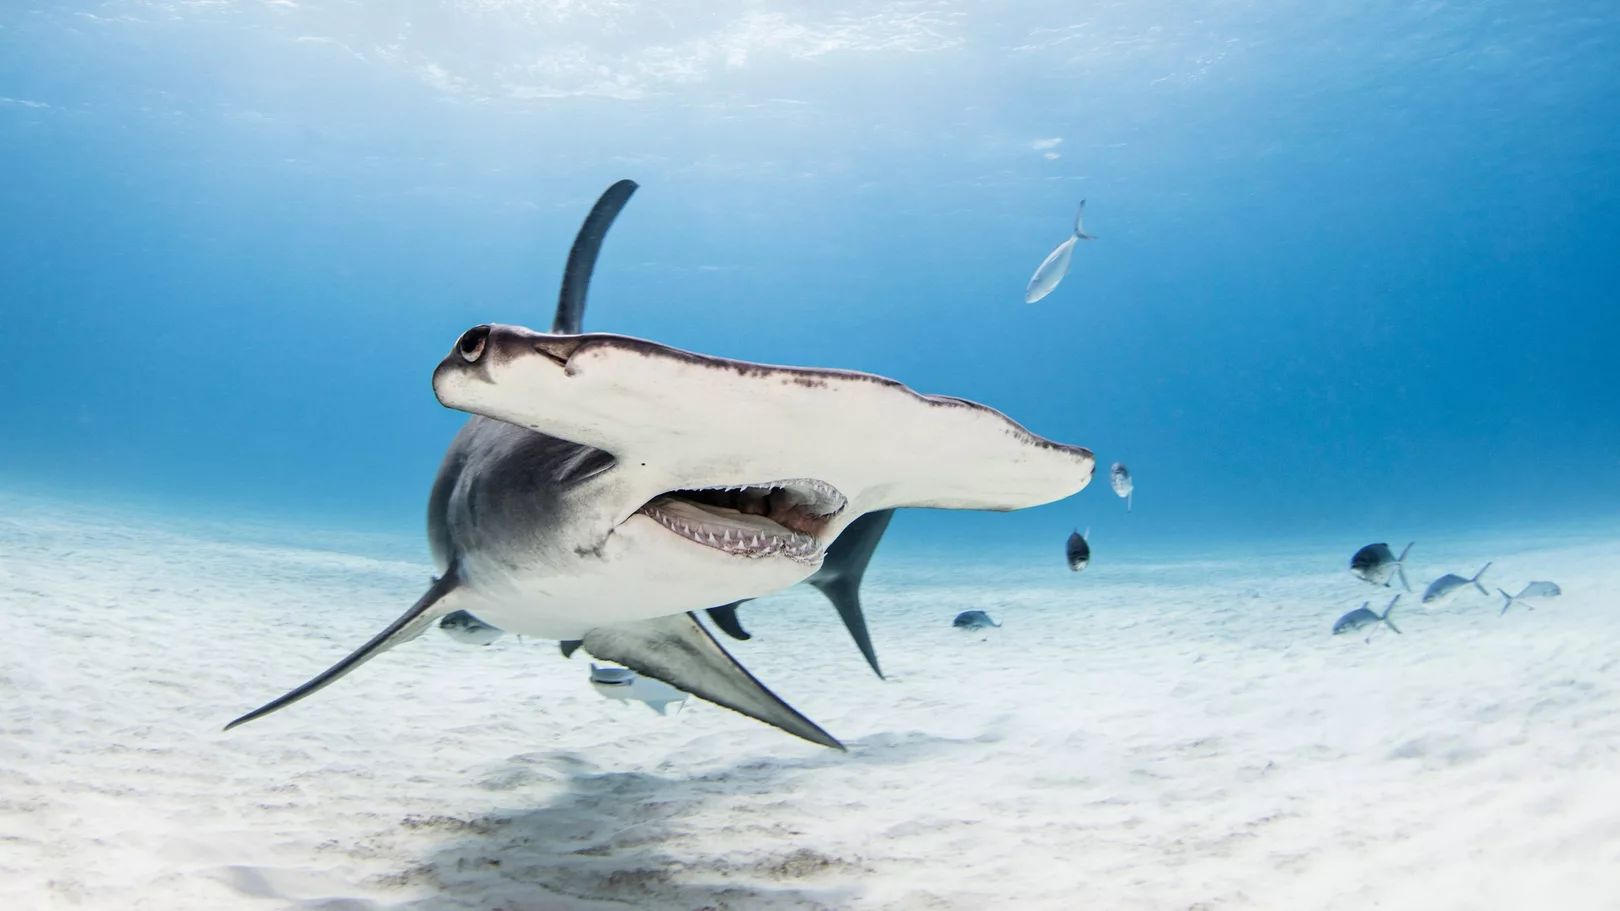 A hammerhead shark swimming over the sandy bottom